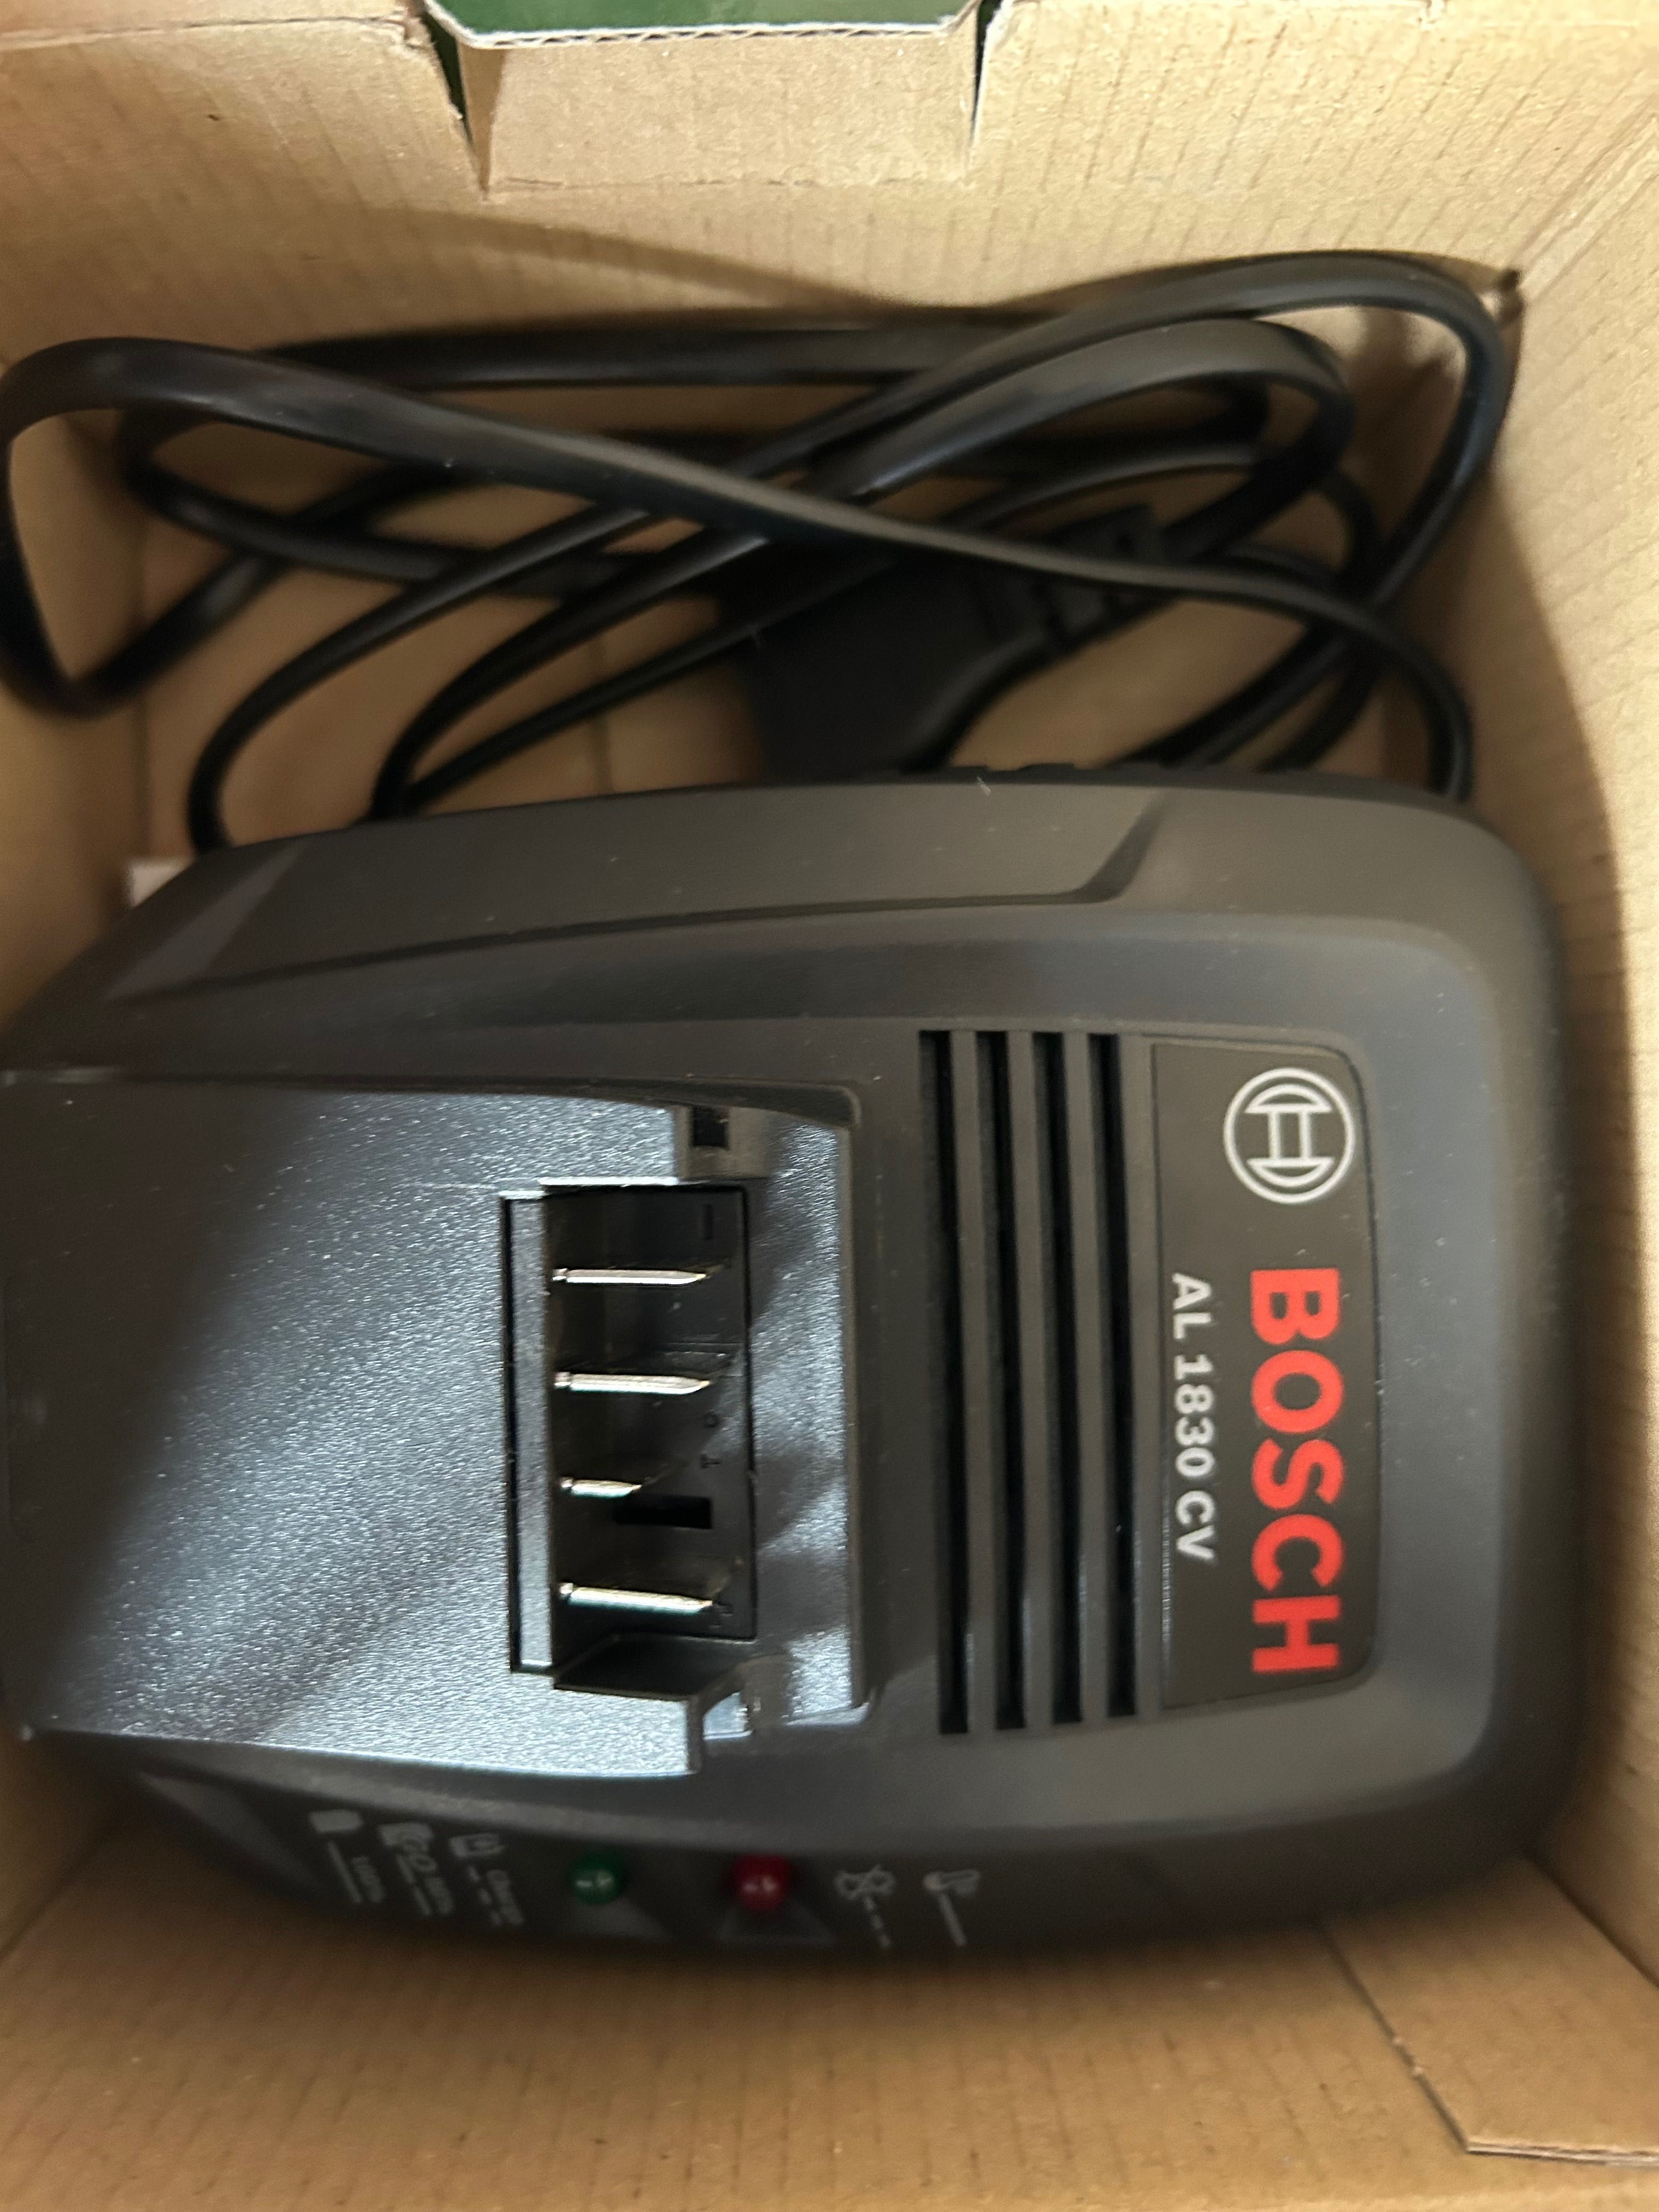 Bosch charger 18v